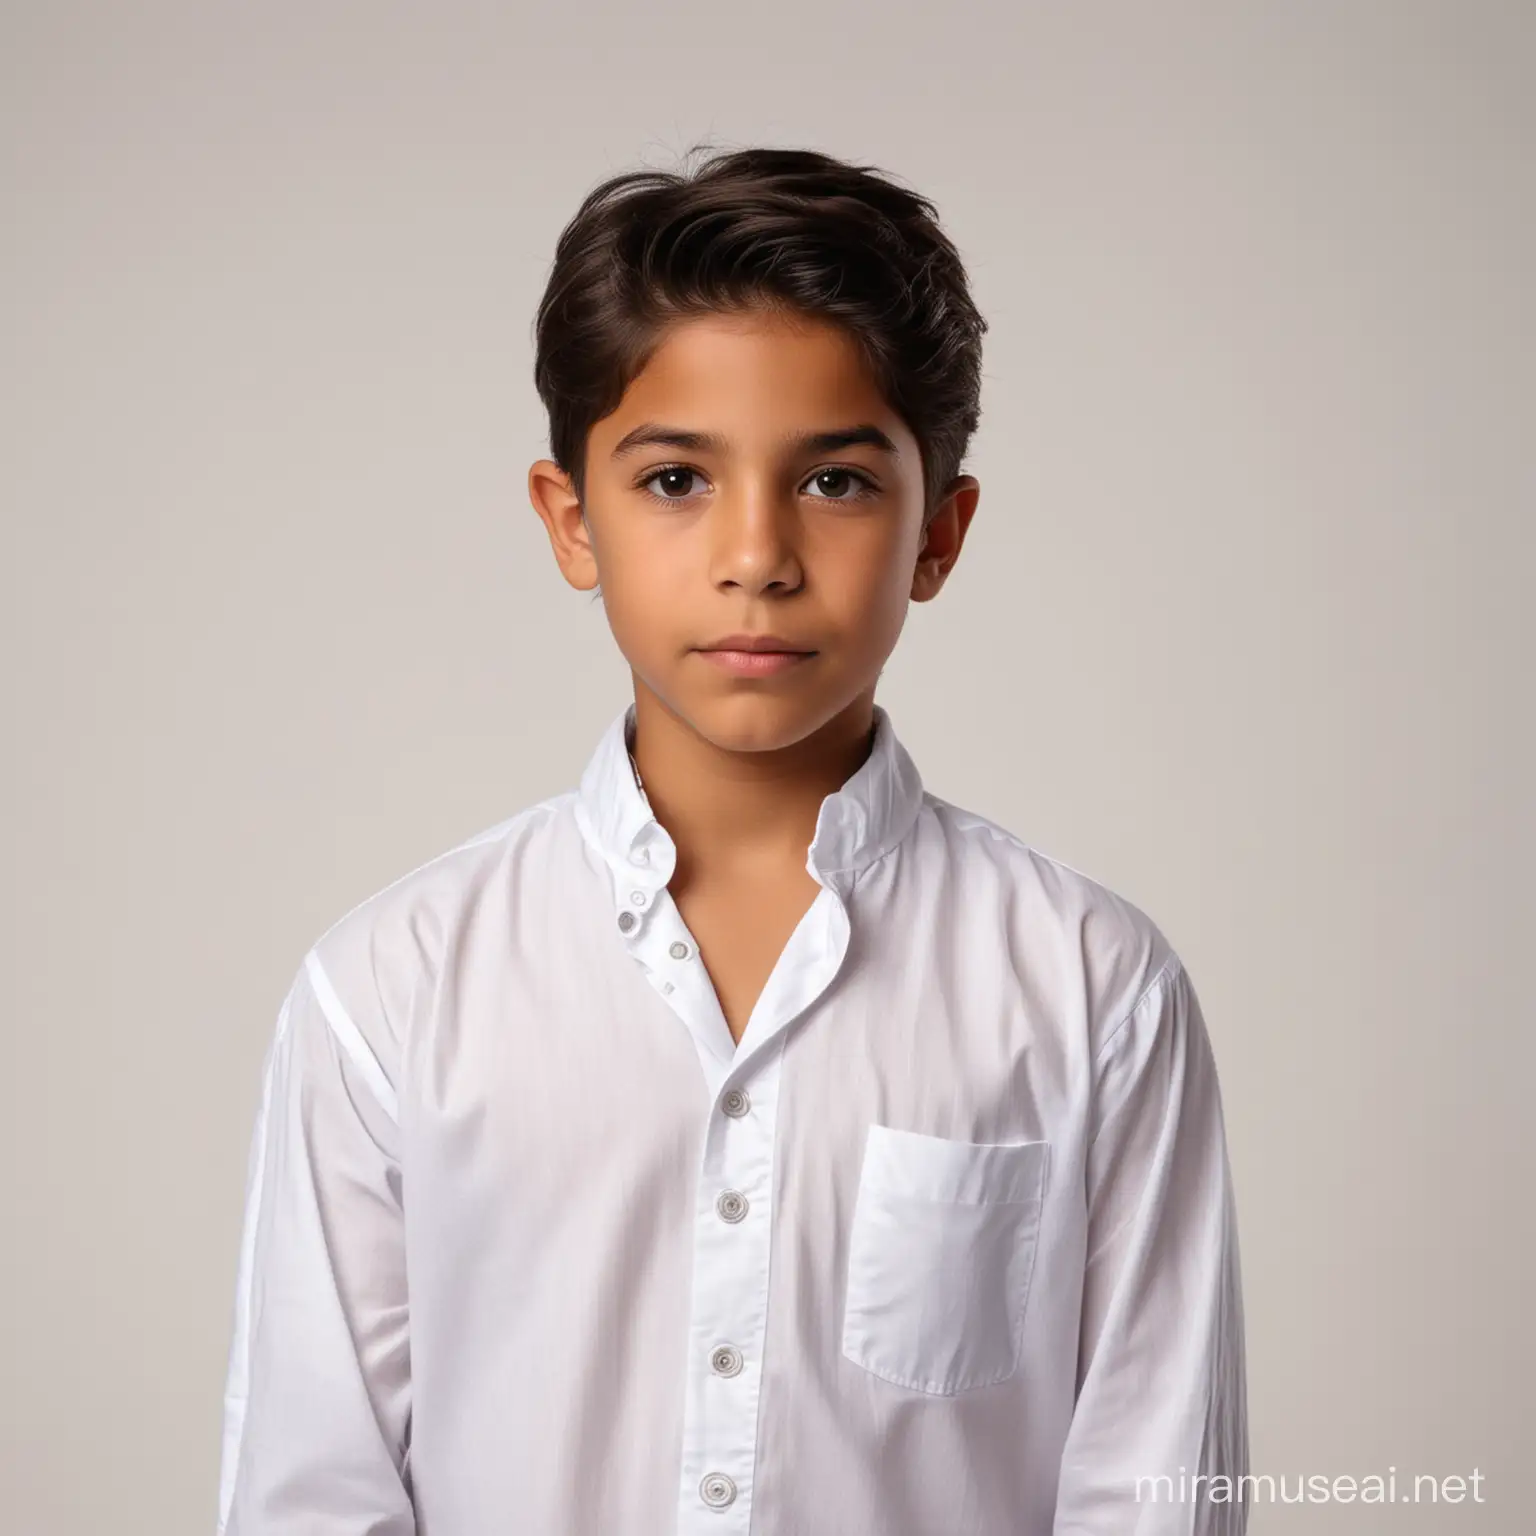 Latino School Boy in White Chemise on White Background in 4K Portrait